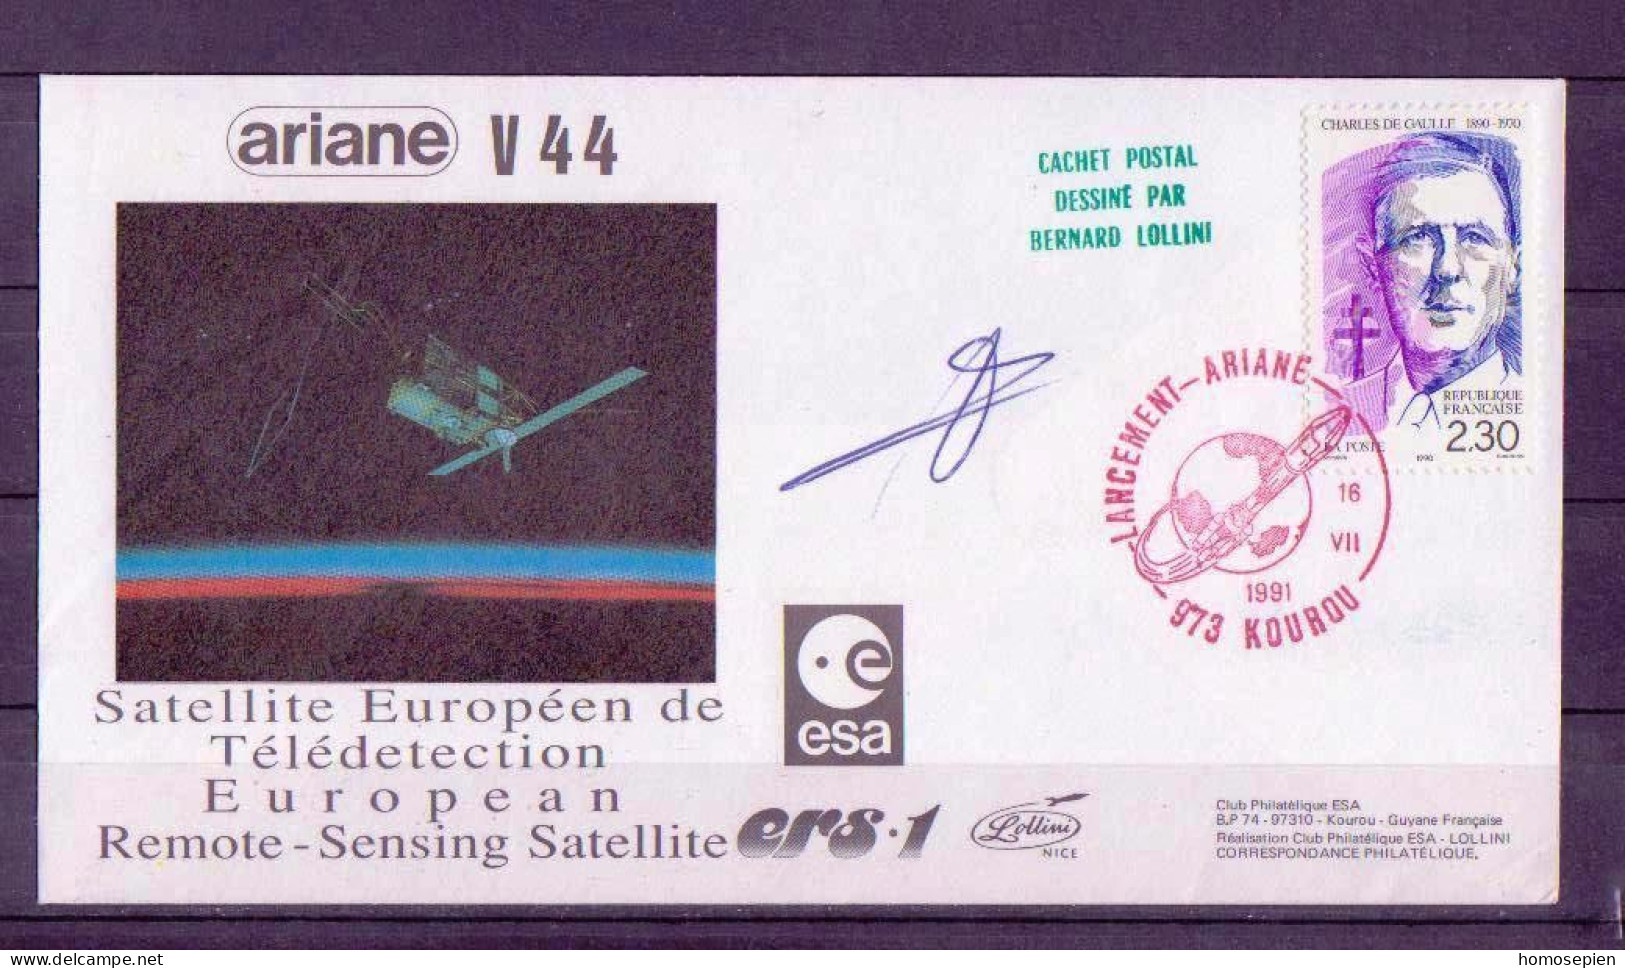 Espace 1991 07 17 - ESA - Ariane V44 - Composite Rouge - Europe